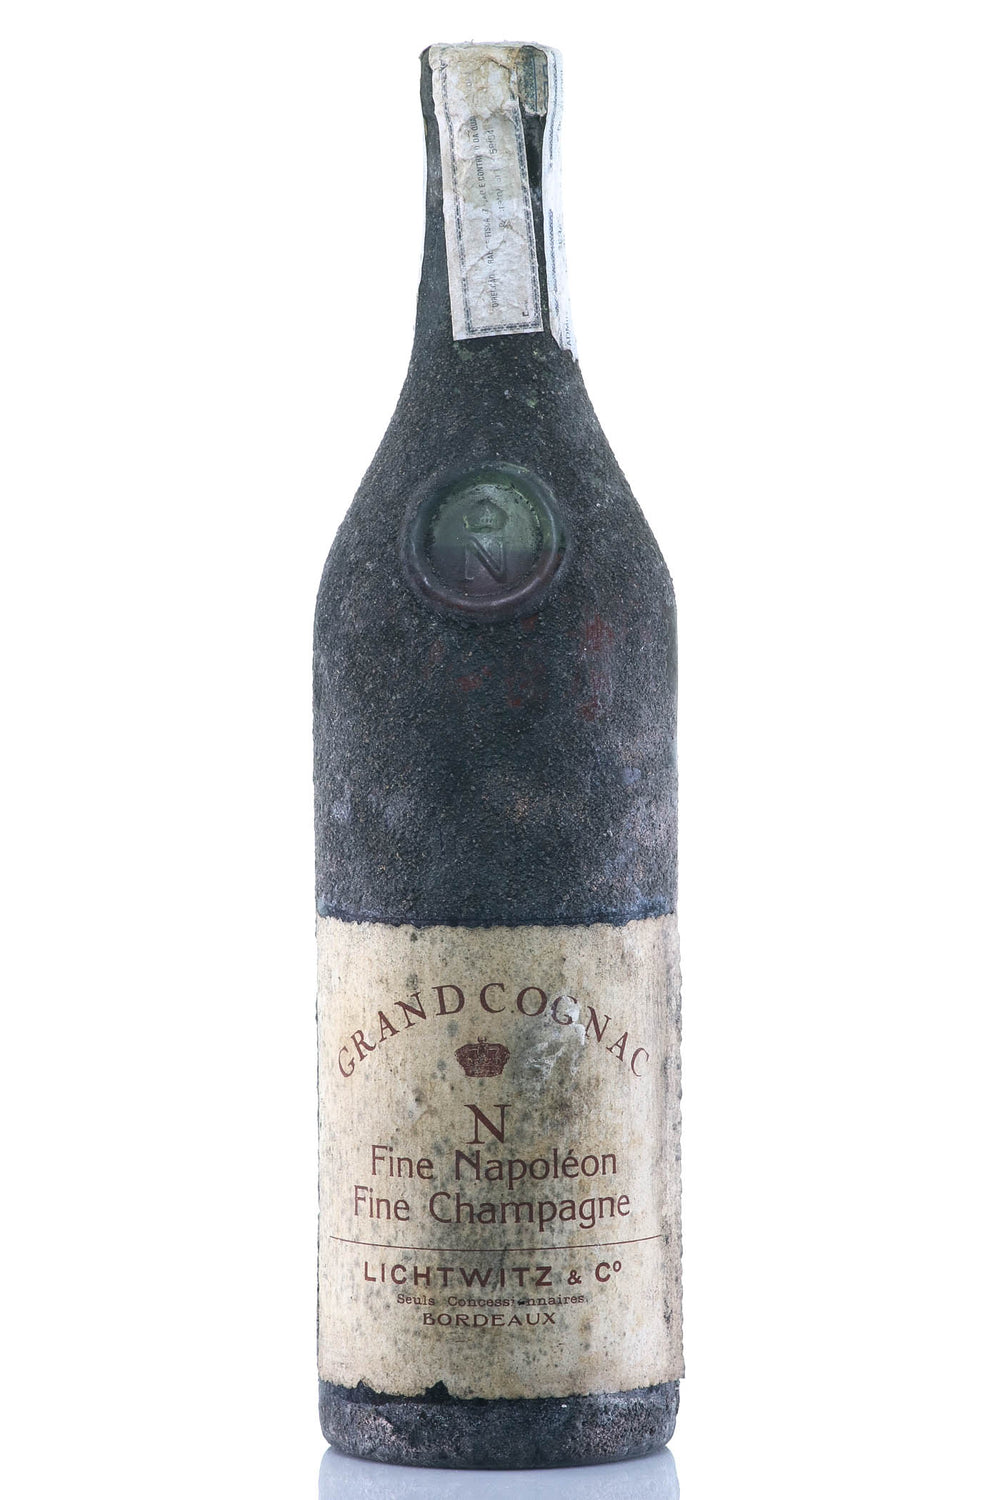 Lichtwitz & Co 1910 Cognac Grande Fine Champagne Napoleon - Rue Pinard